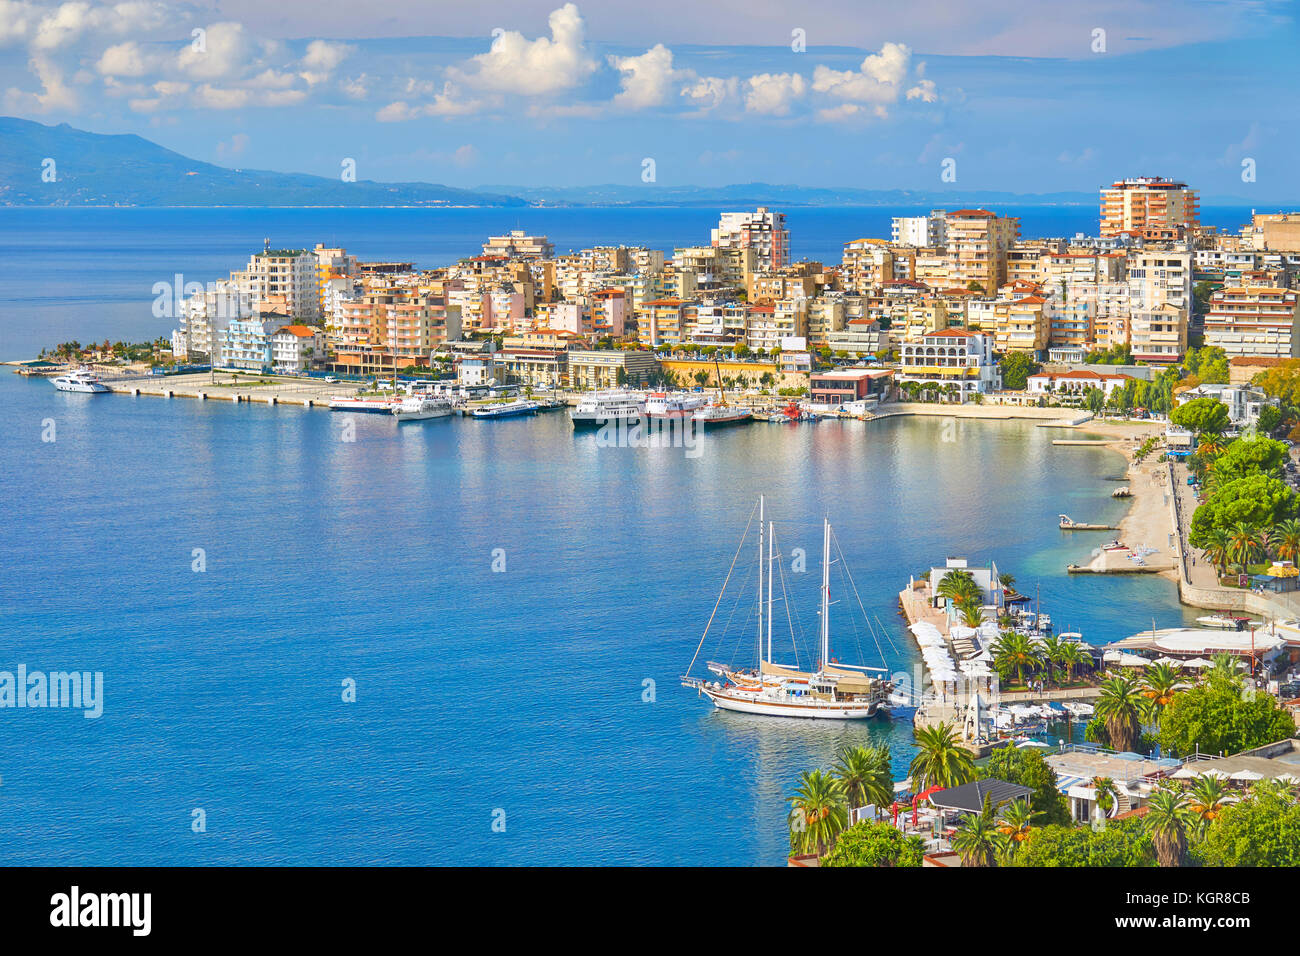 Vista aerea di Saranda porto e marina, Albania Foto stock - Alamy